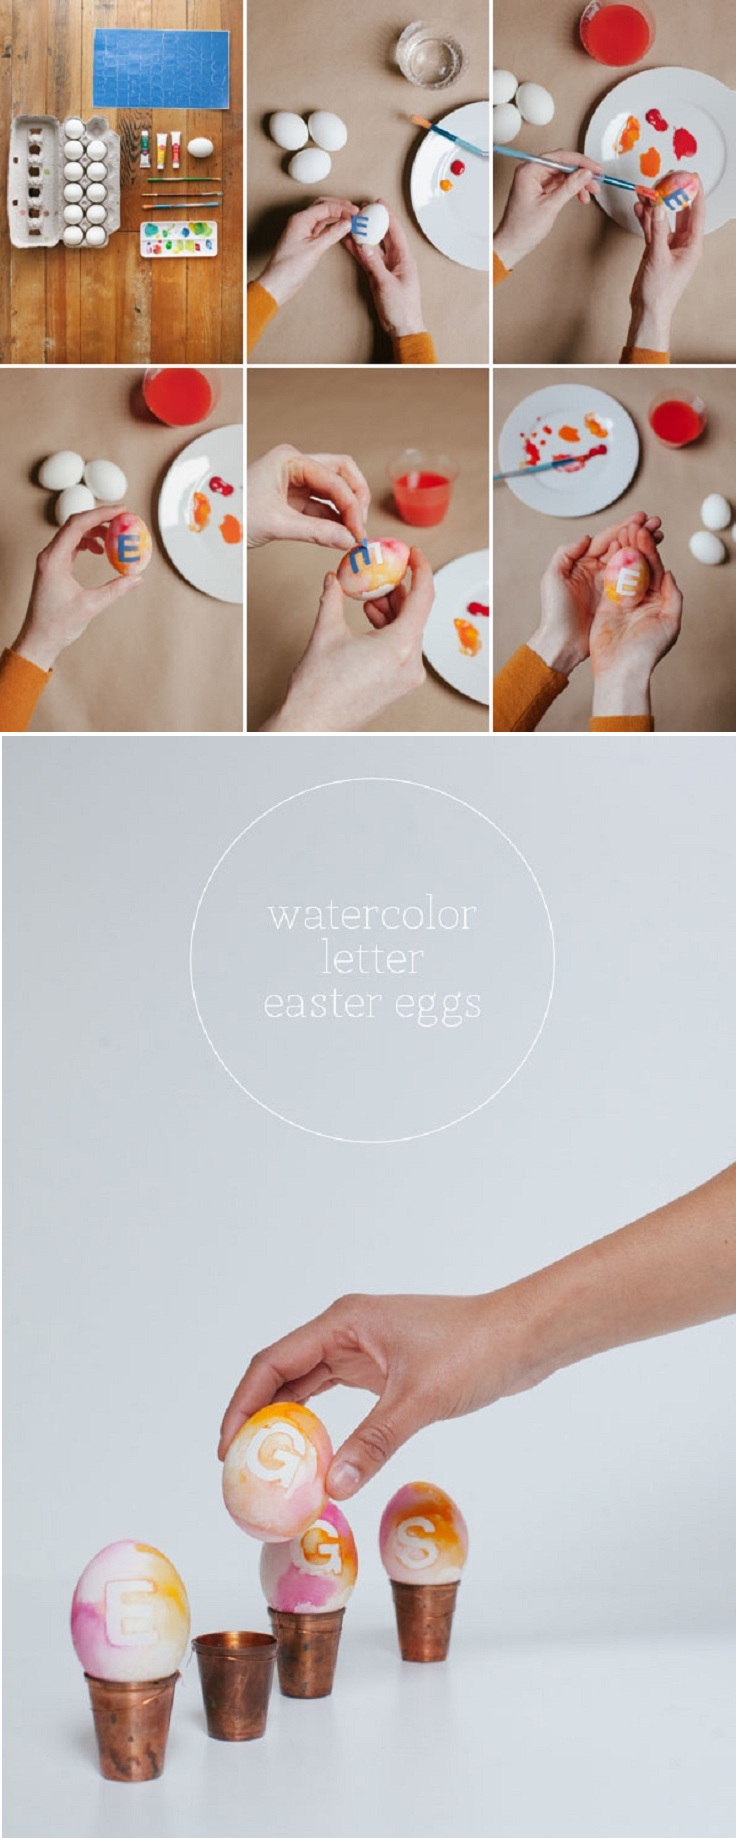 Watercolor-Letter-Easter-Eggs1